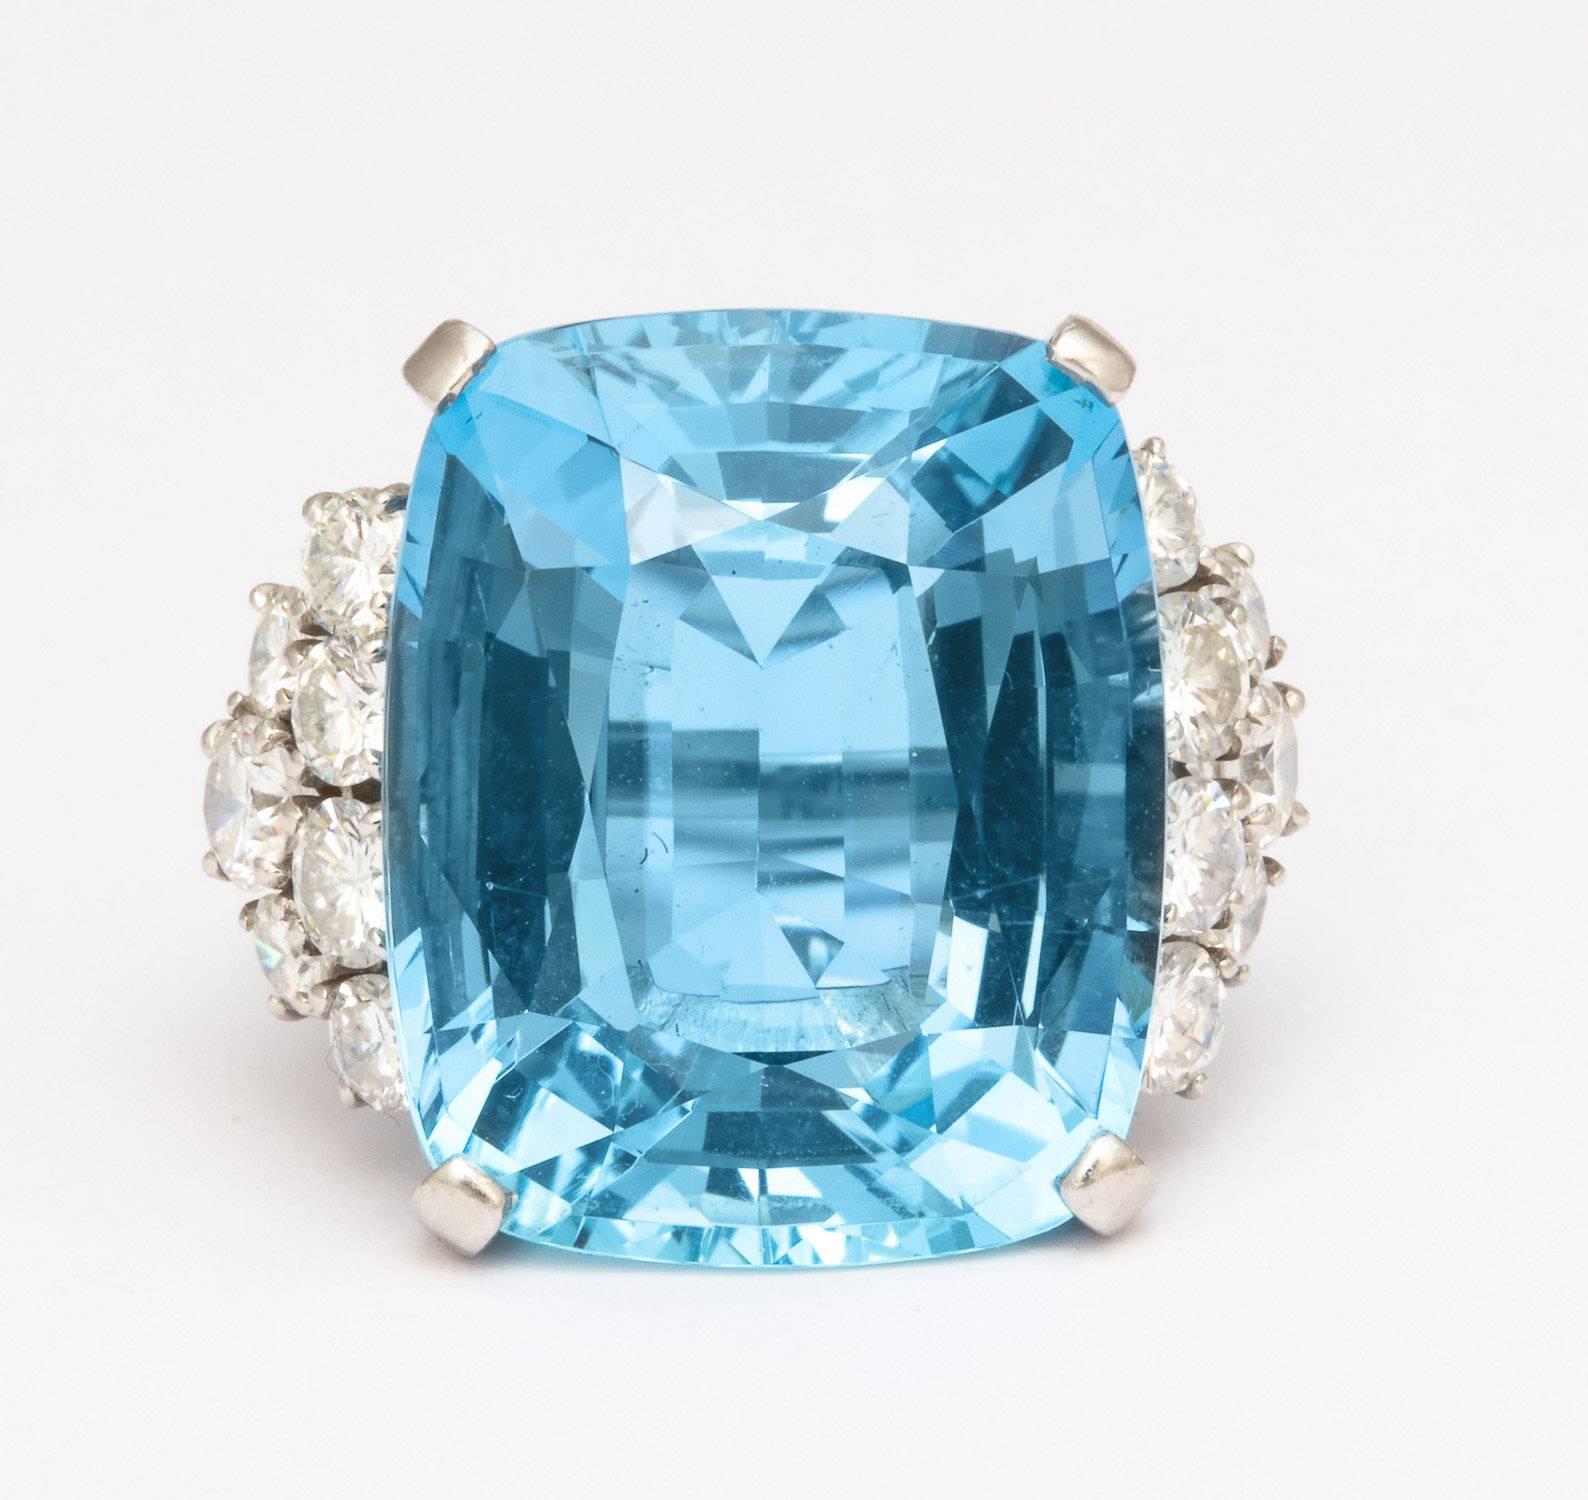 Spectacular color Aqua Marine 28.35 carats
14 Round Brilliant Cut diamonds  4.00 carats

Handmade Platinum Mounting

circa 1940